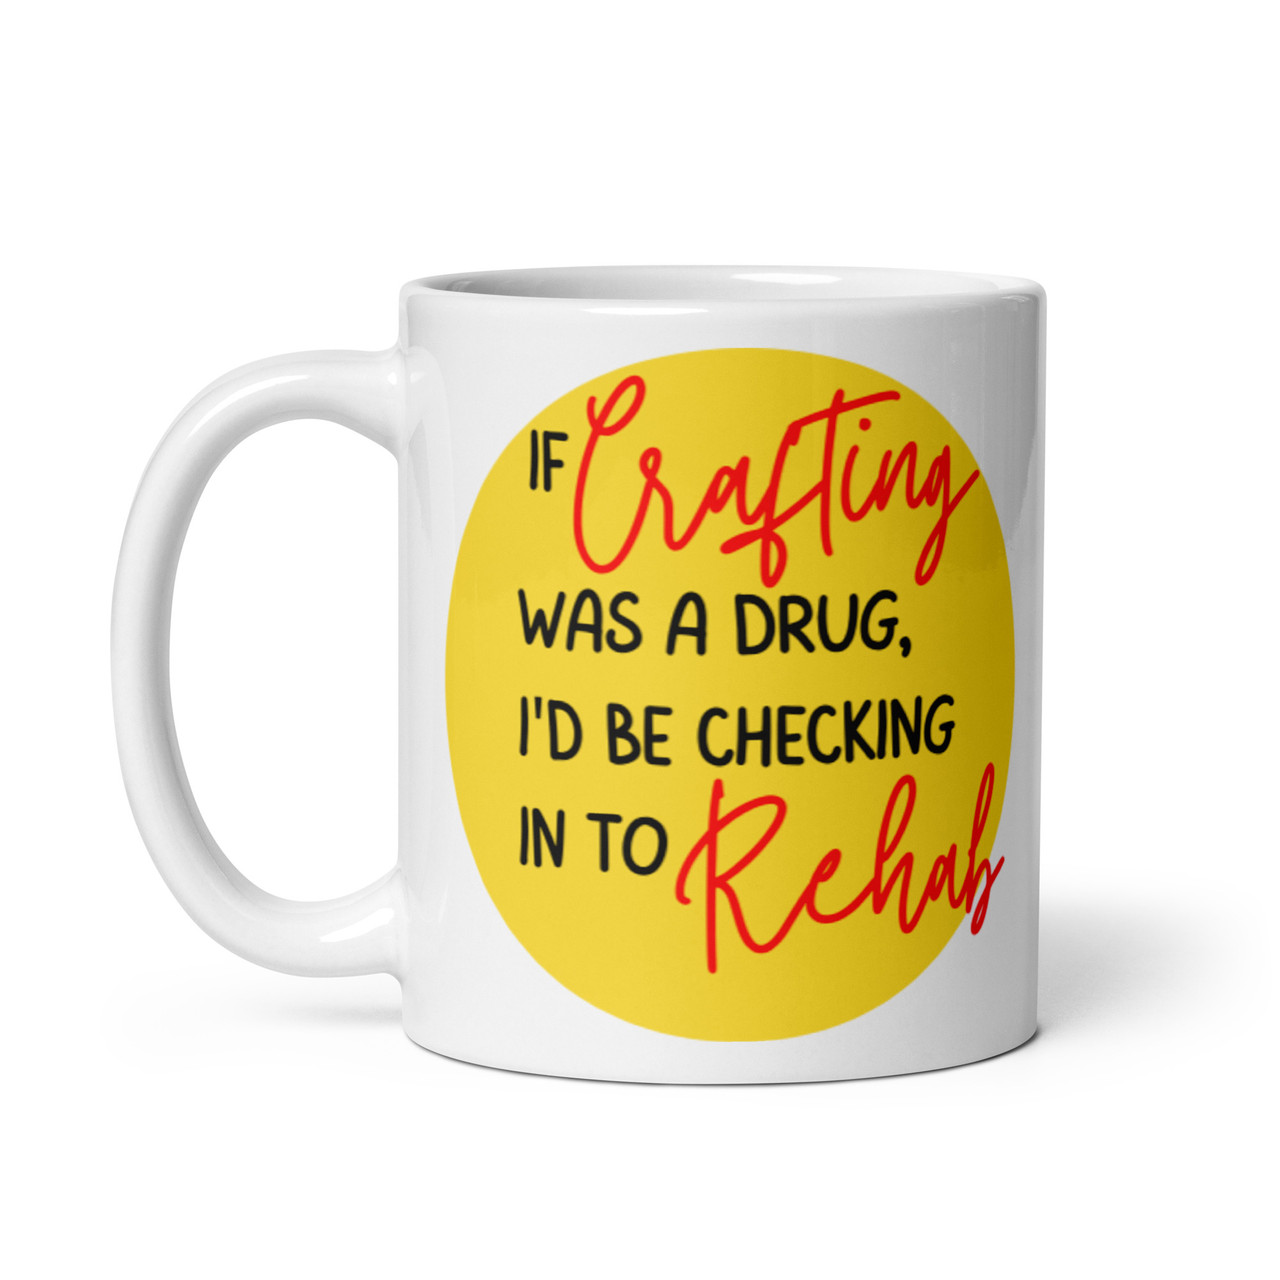 If crafting was a drug - white mug